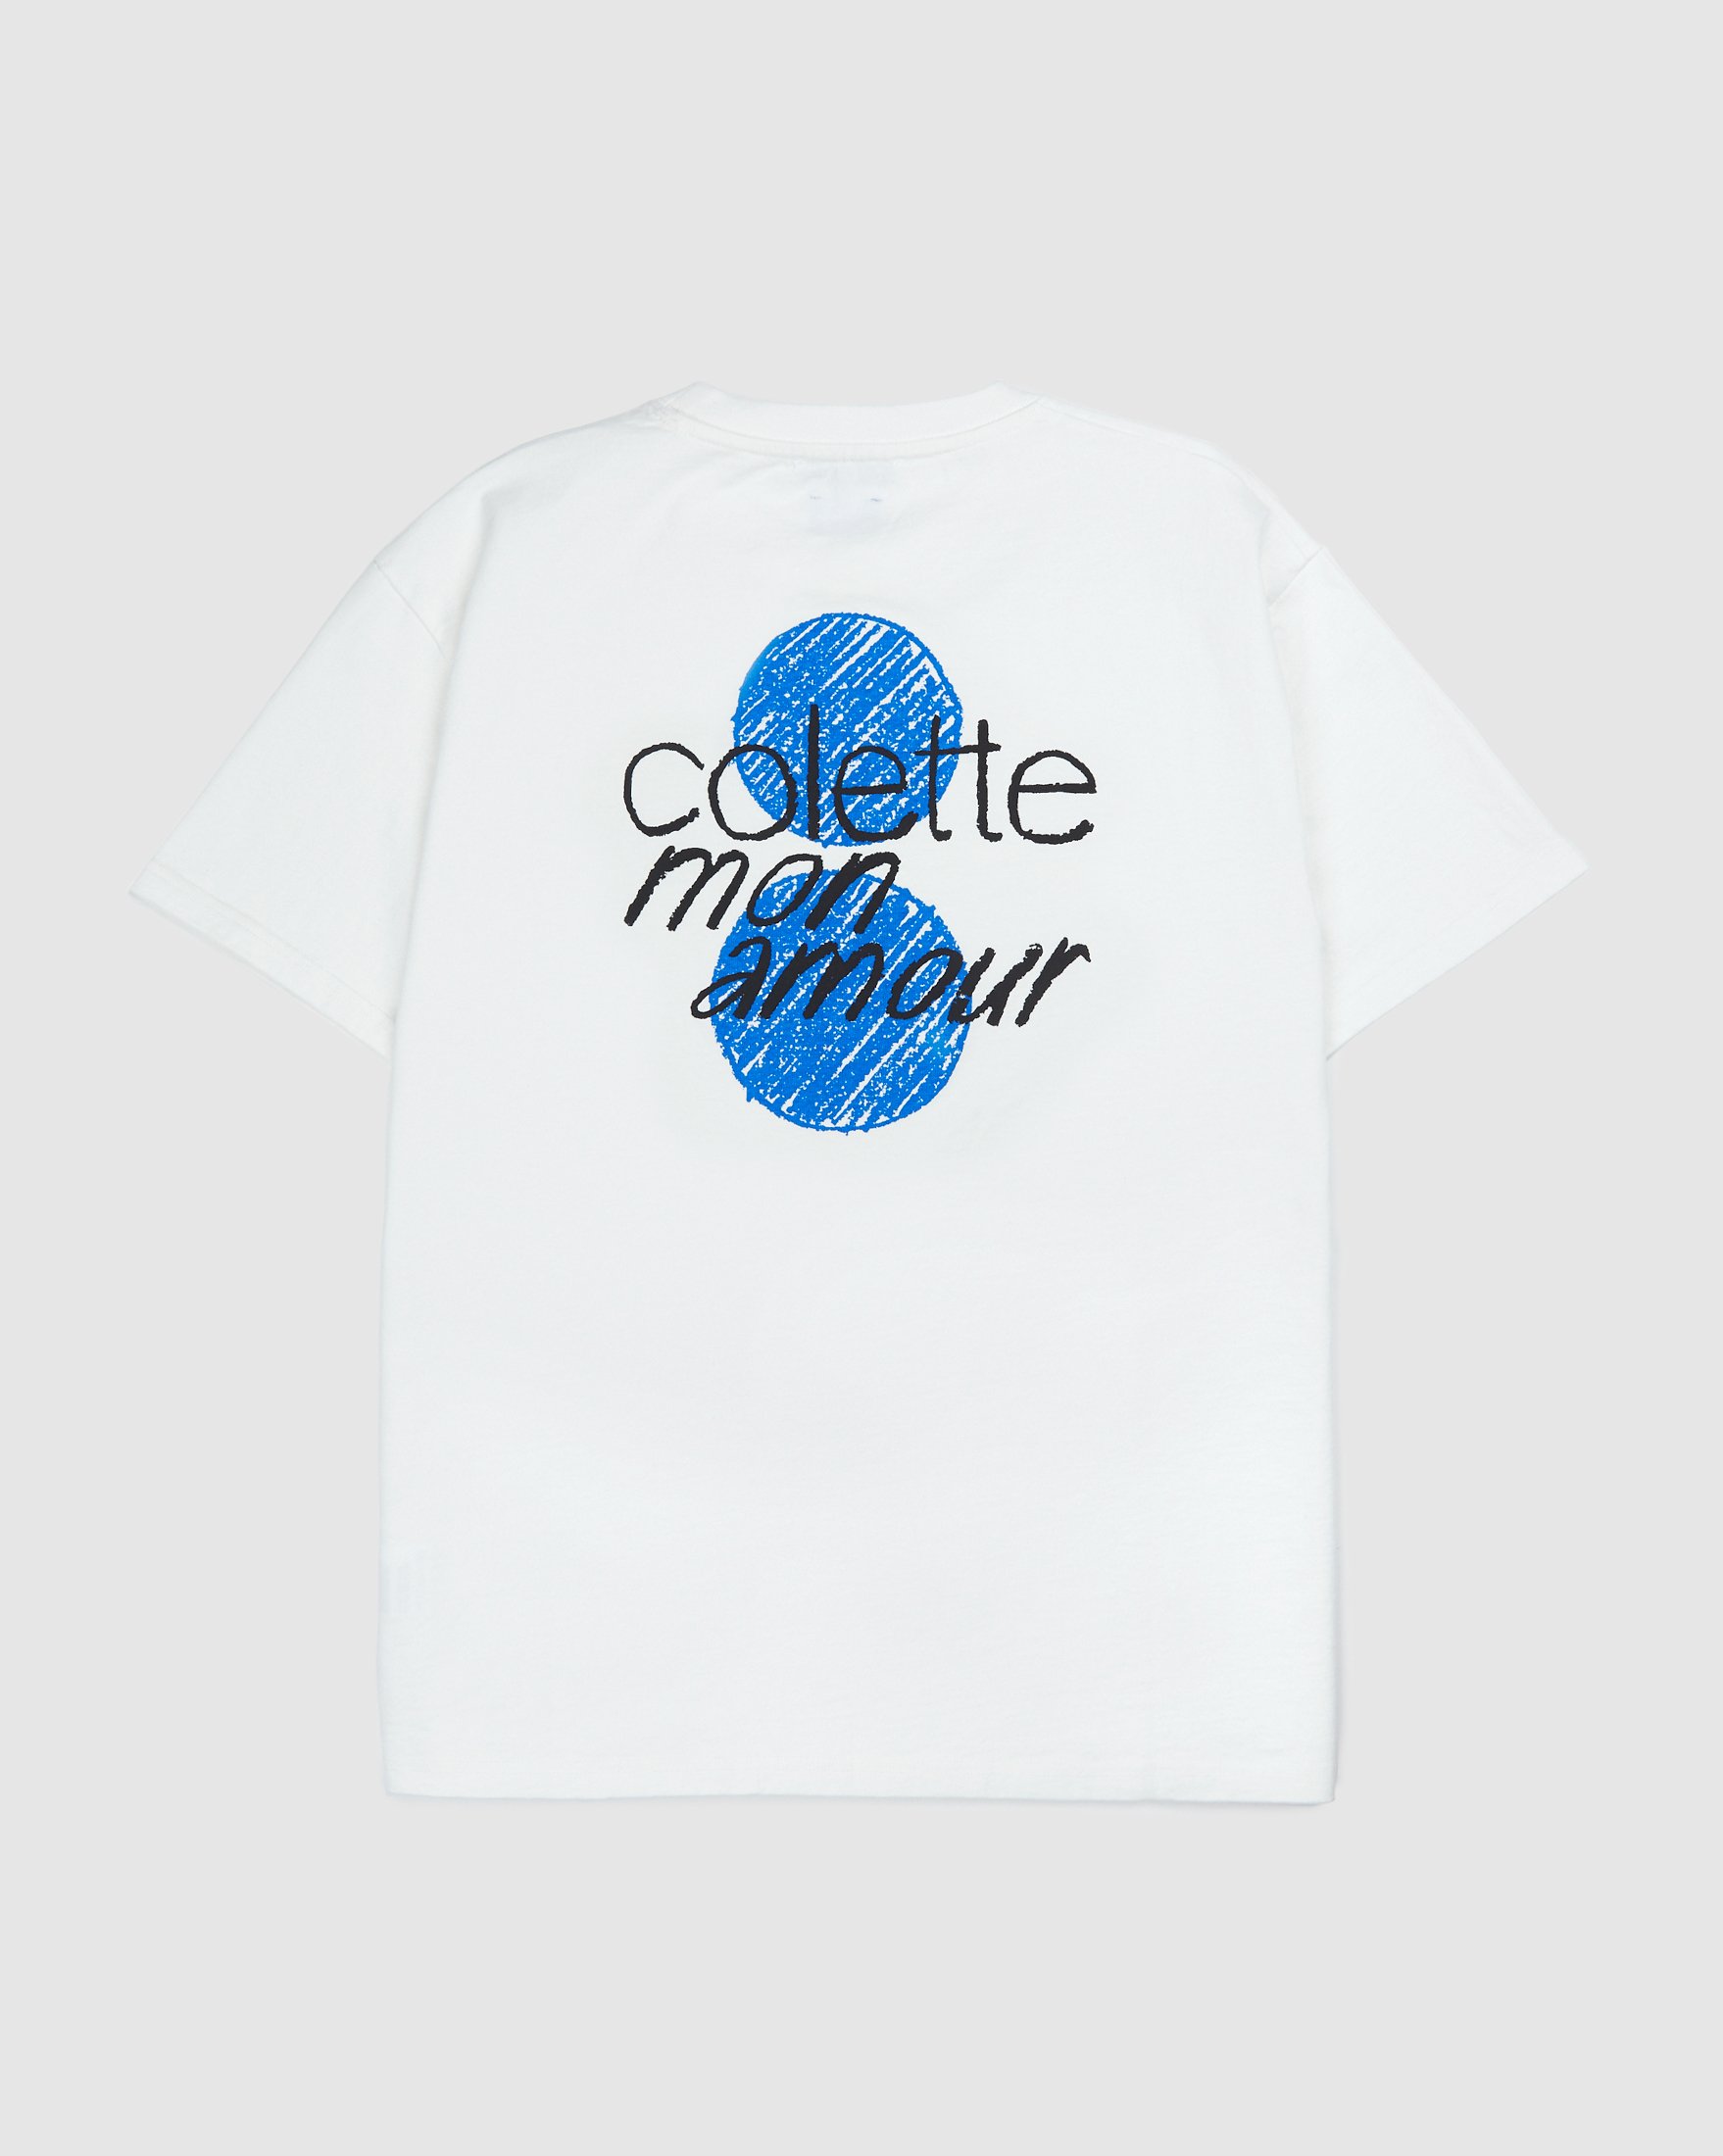 Colette Mon Amour - HS Dots T-Shirt White - Clothing - White - Image 1